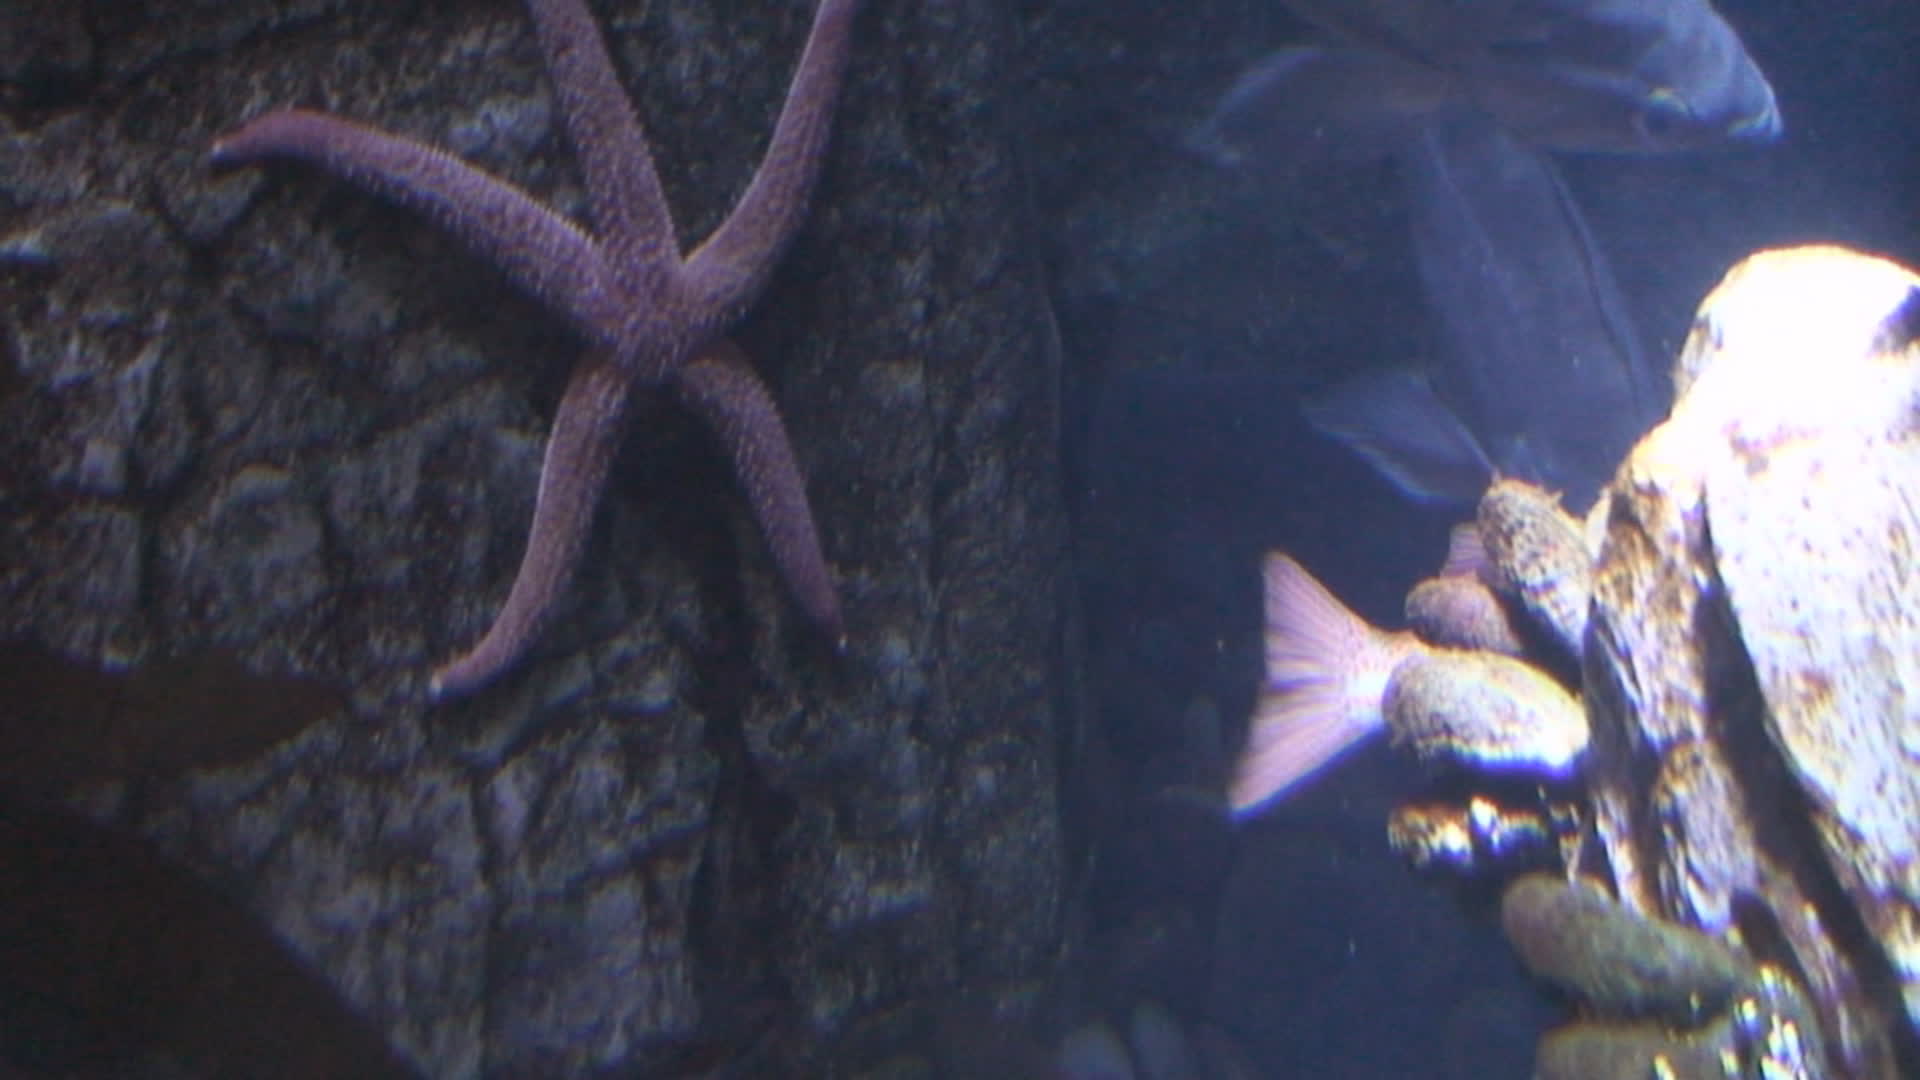 A Cool Looking Starfish - Animals - 4fun.com